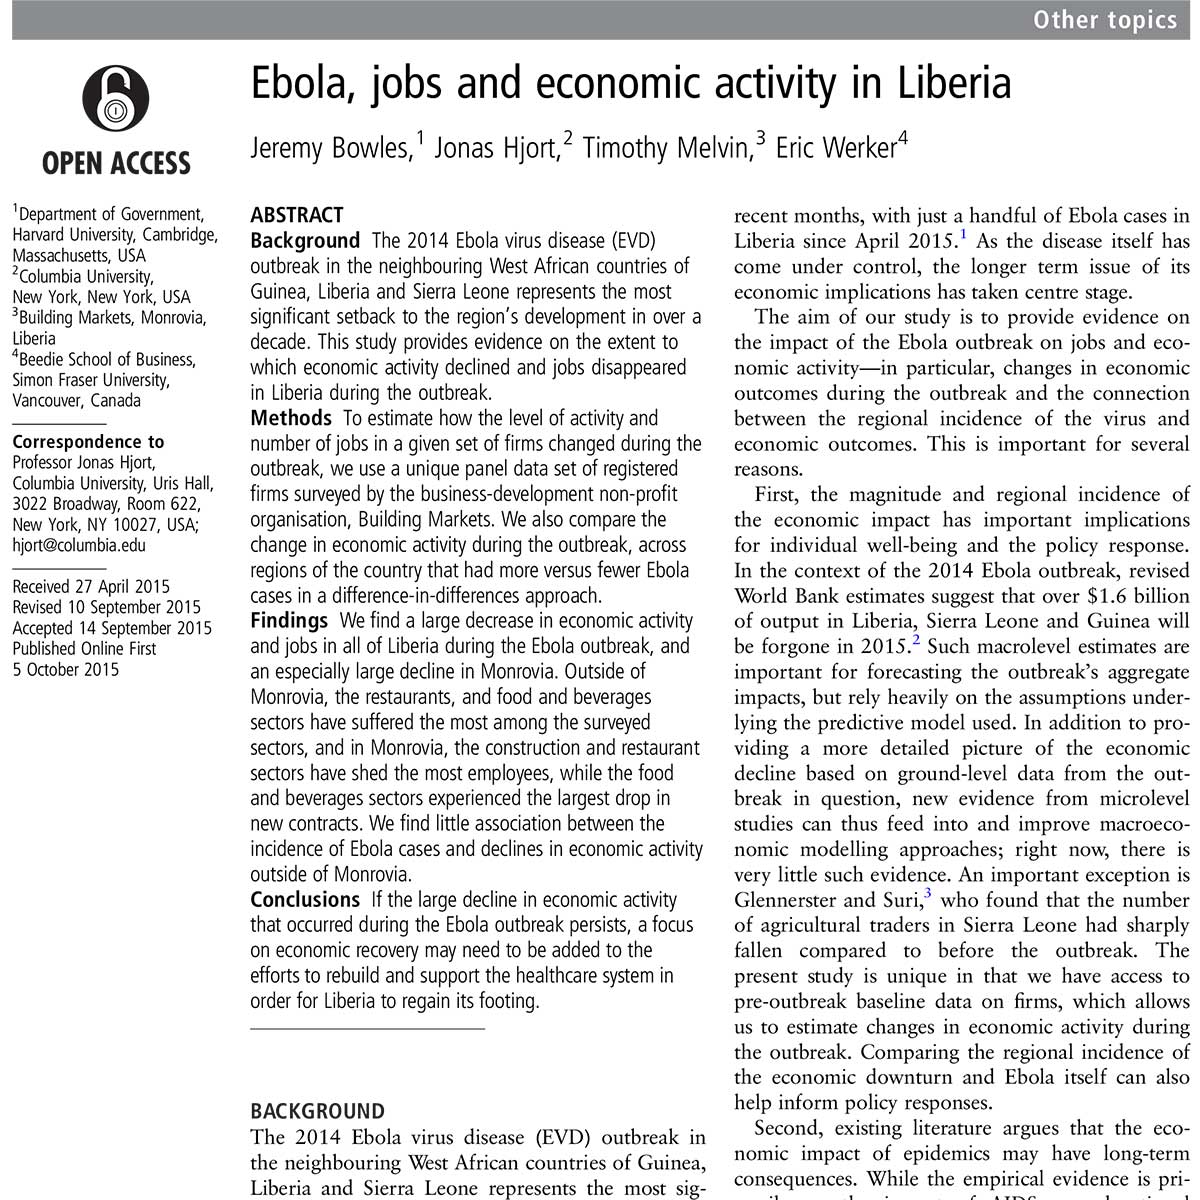 Ebola, Jobs, and Economic Activity in Liberia (2016)